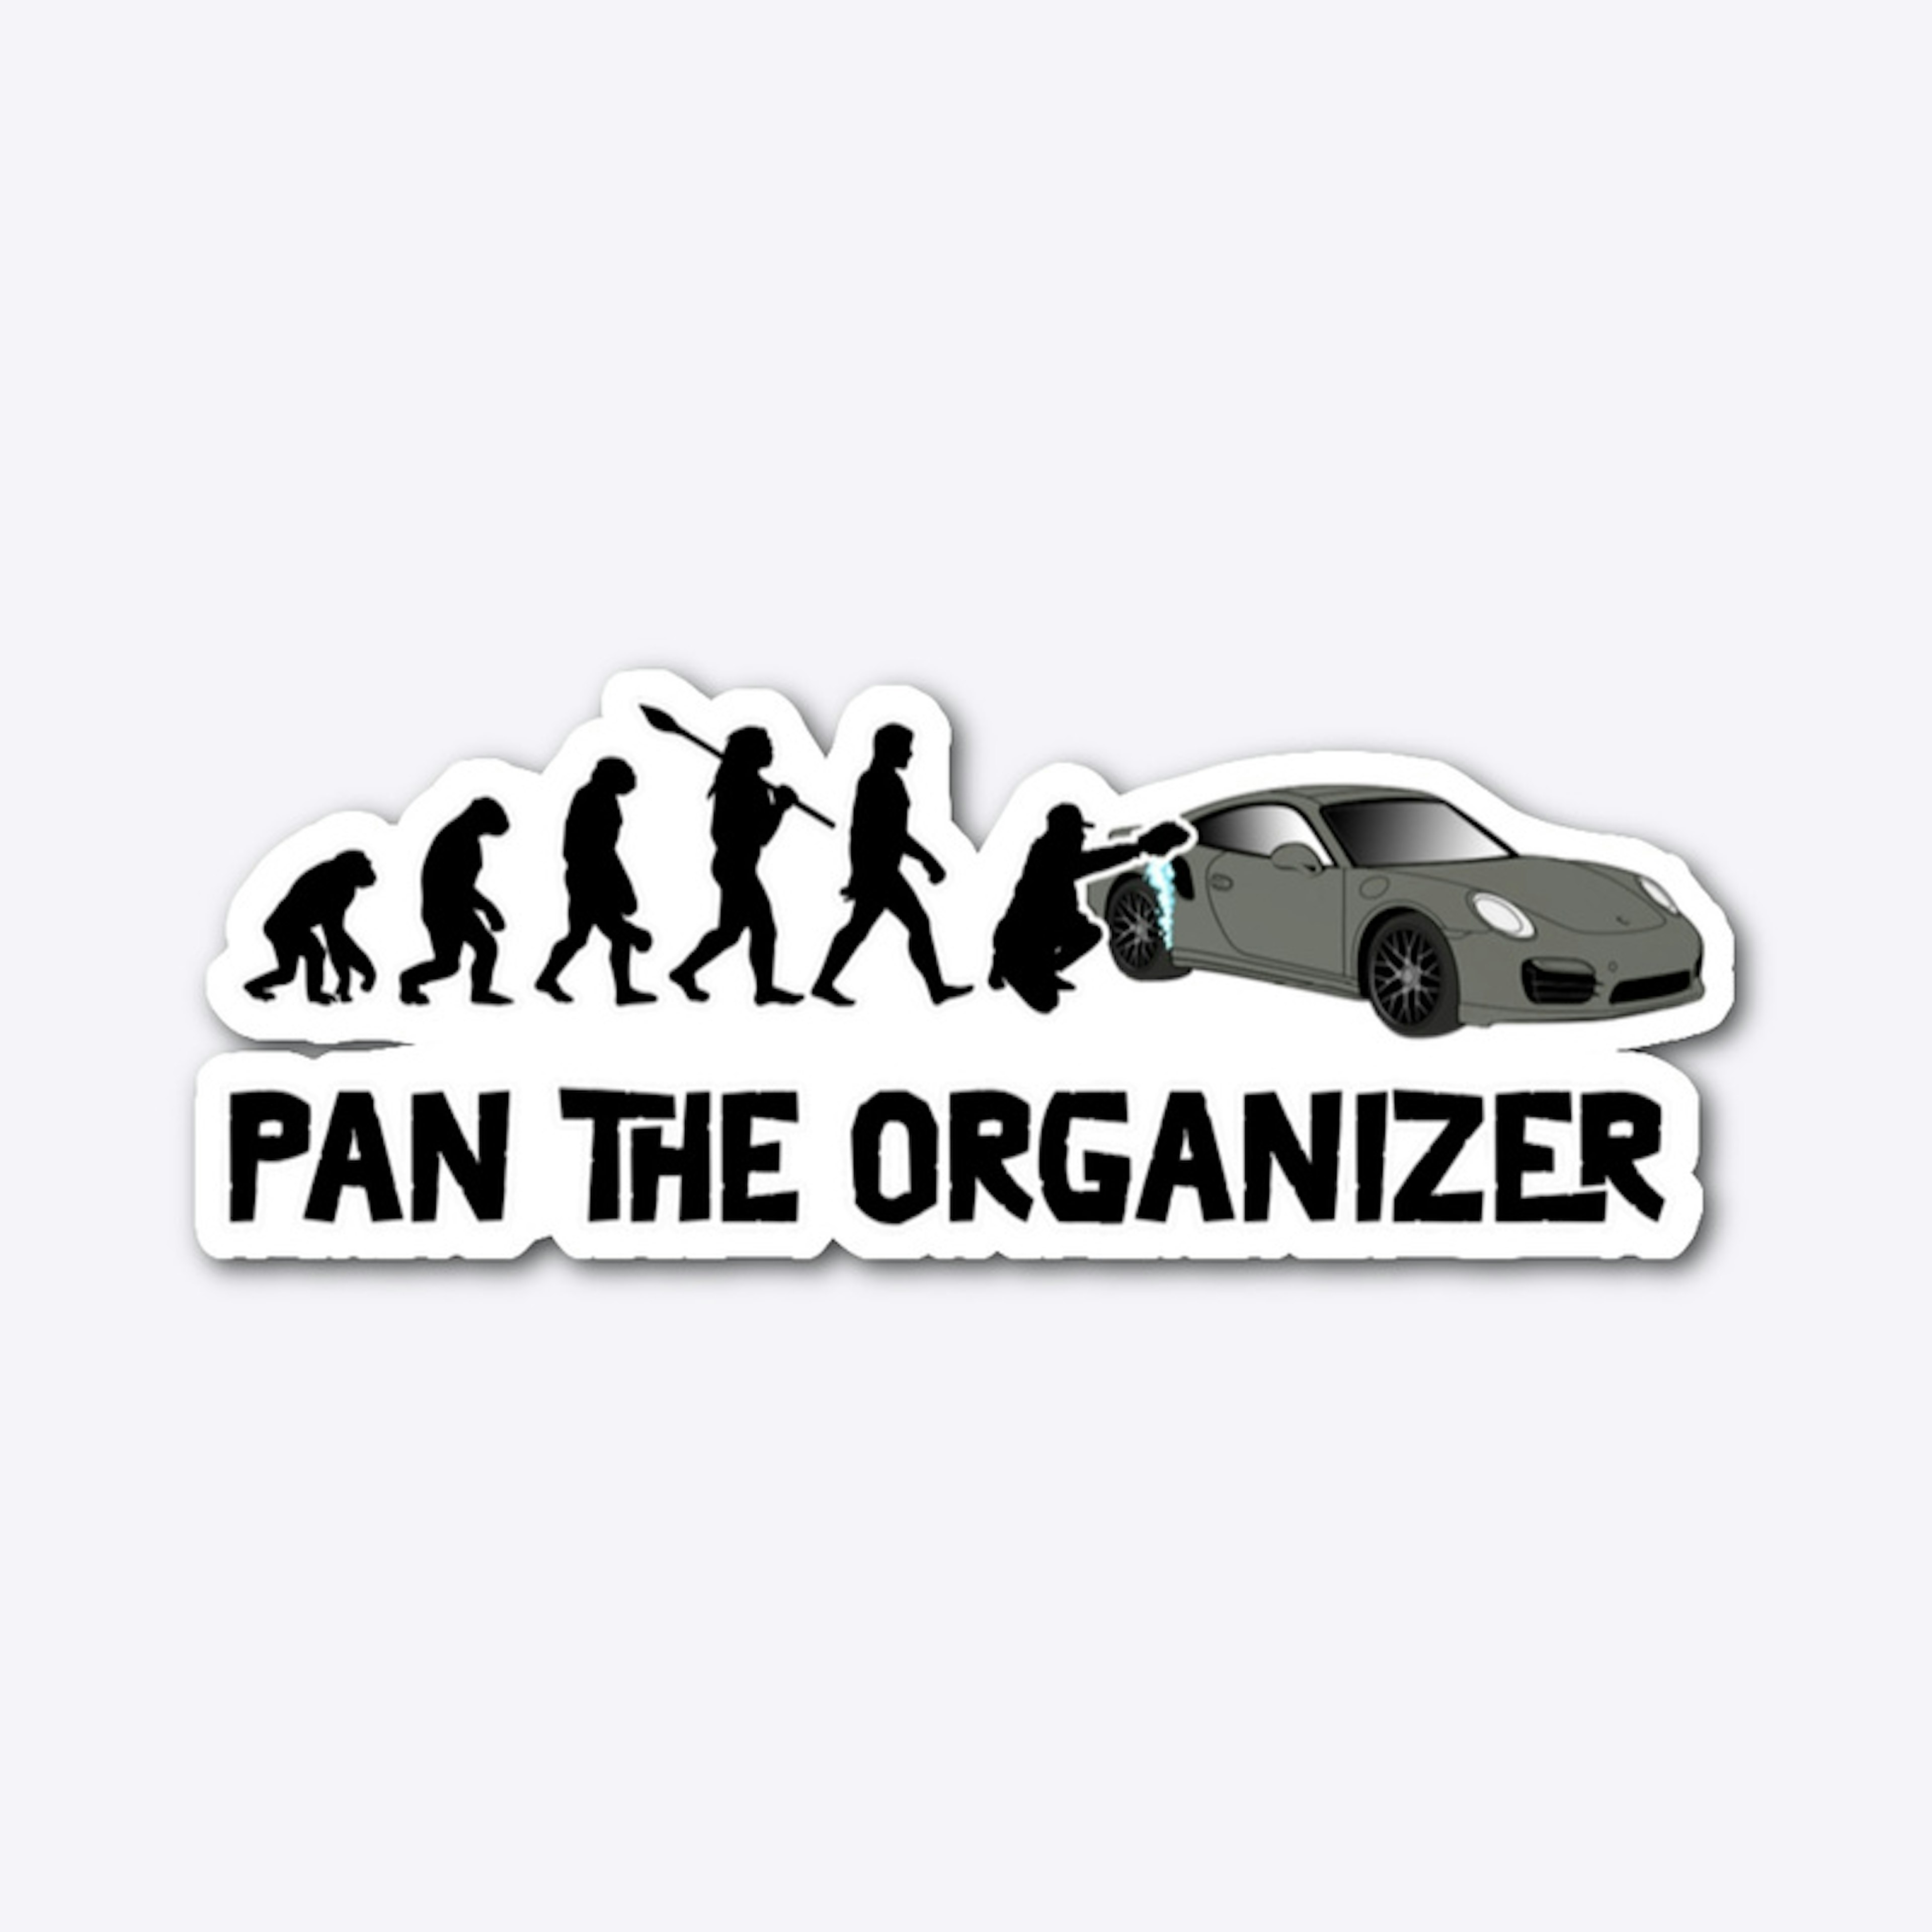 Pan The Organizer evolution of man!